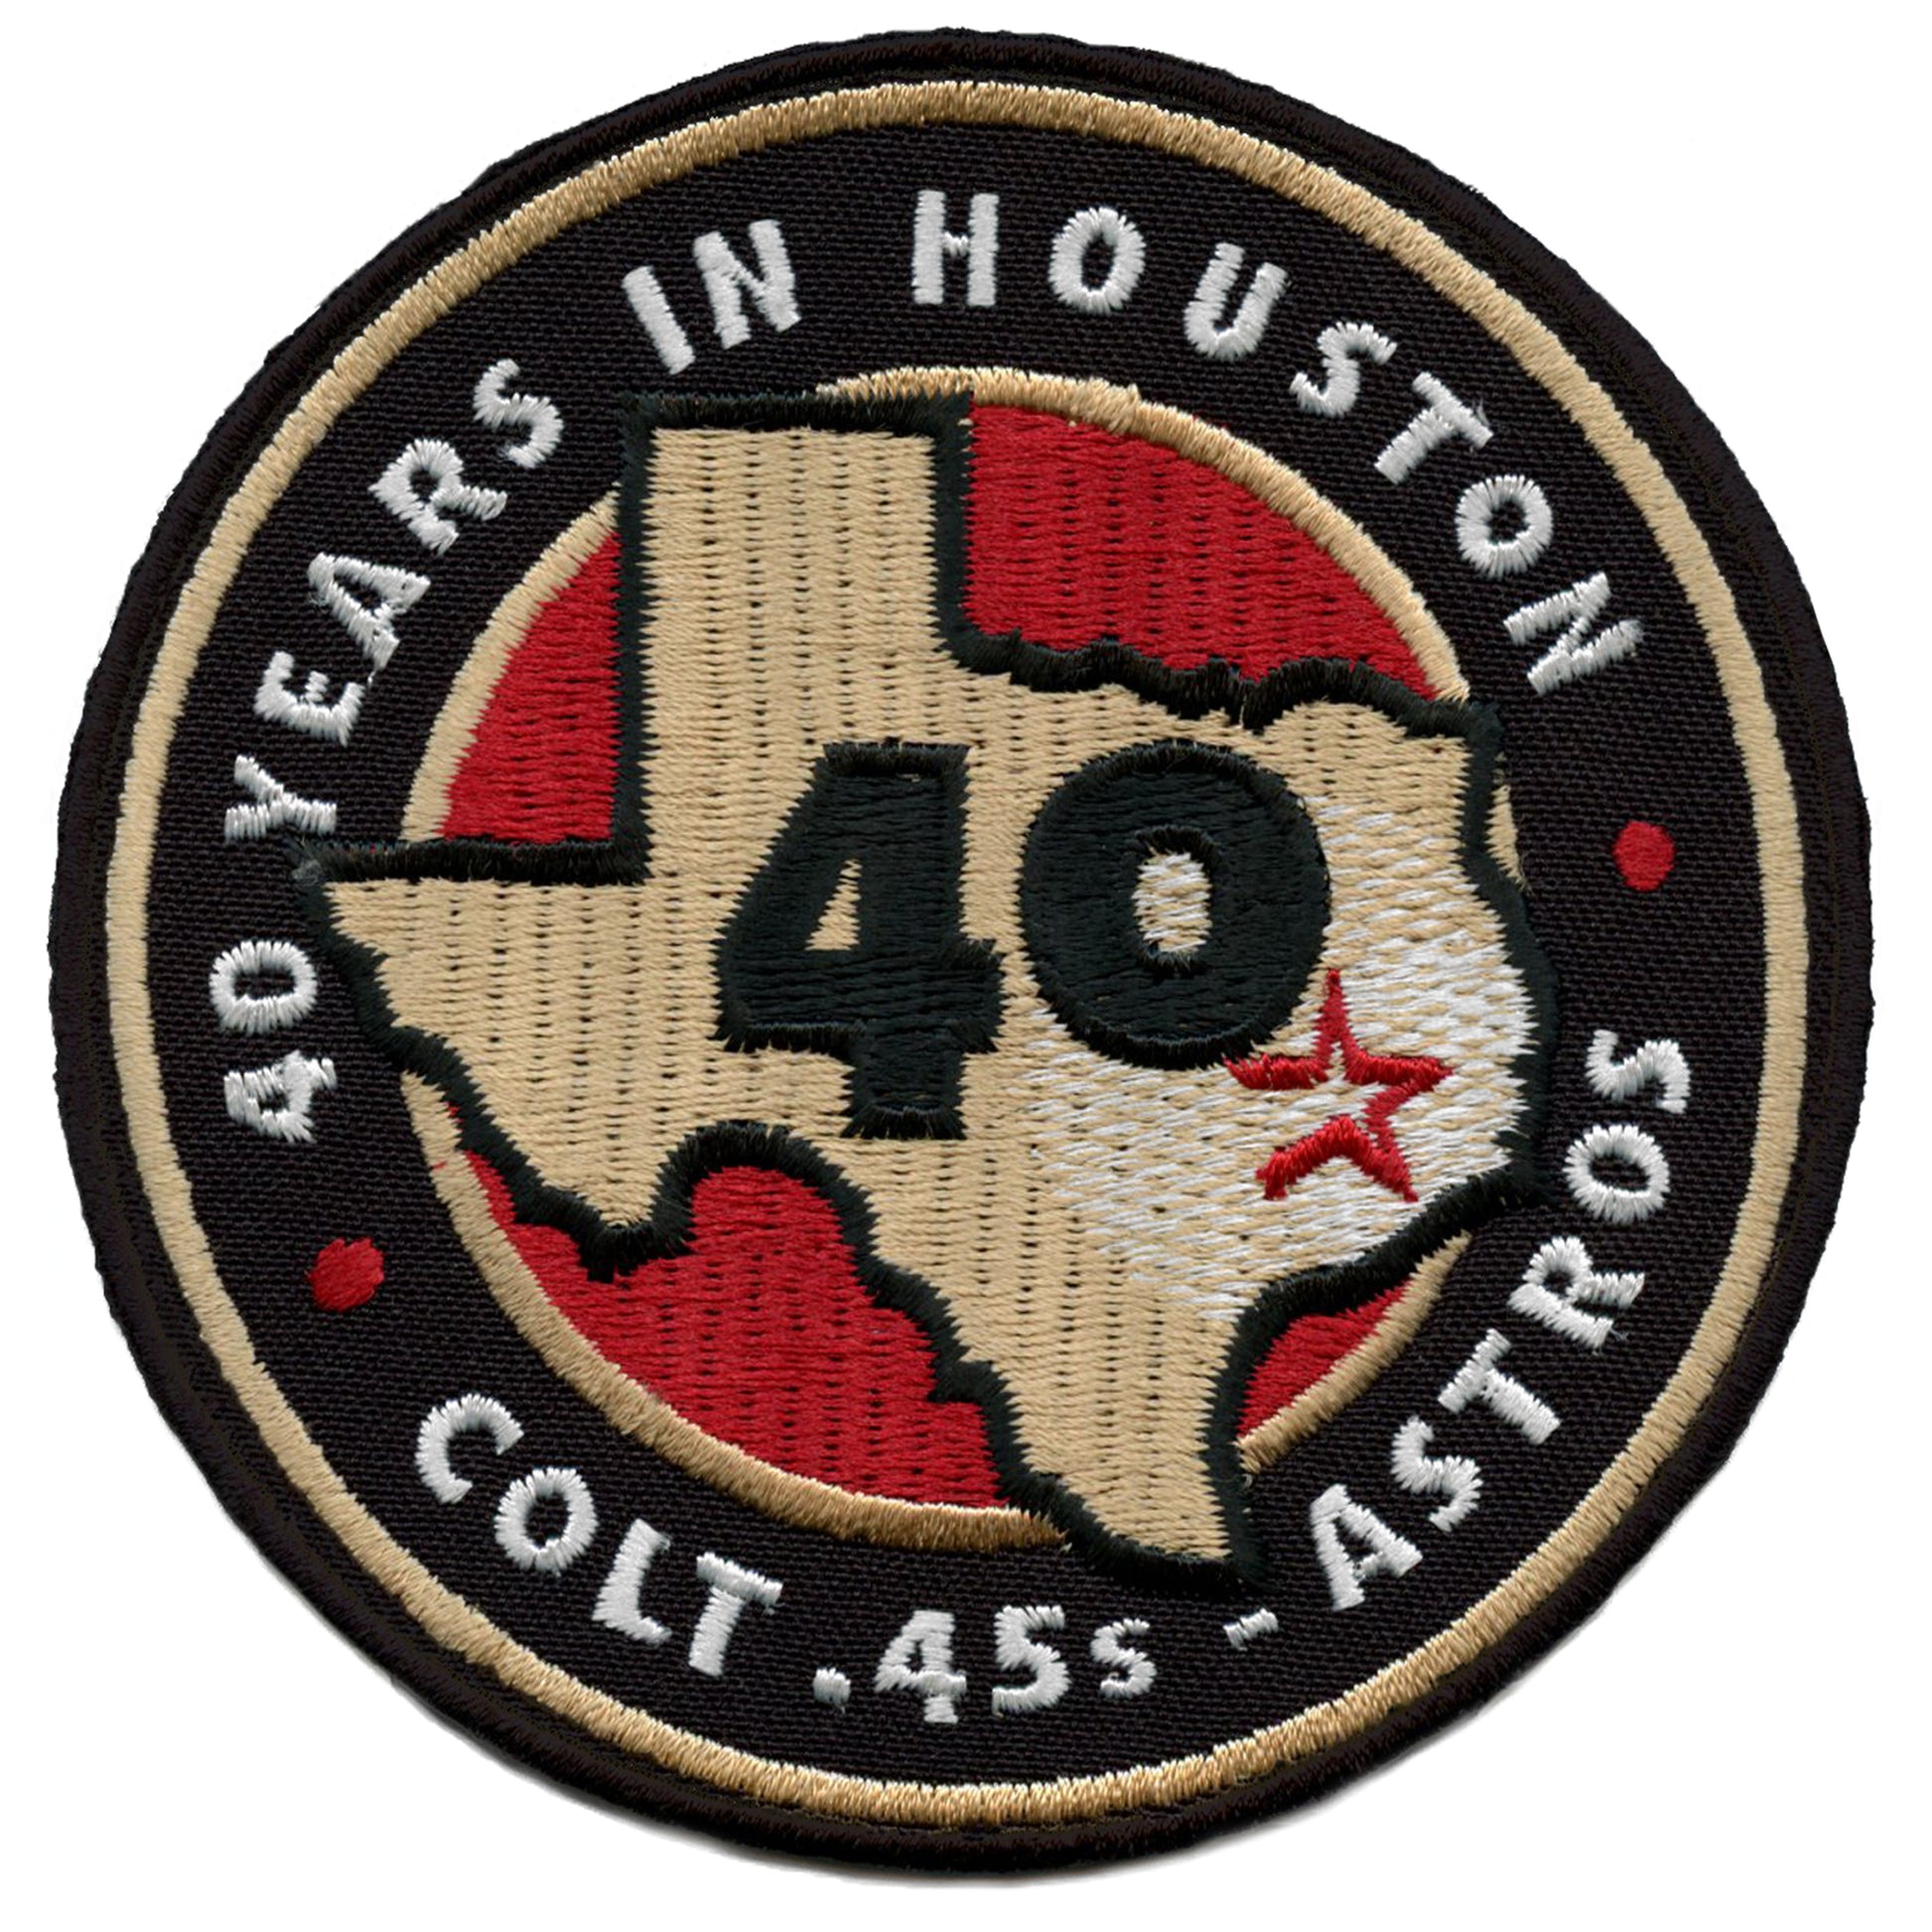 Houston Astros H Emblem Sleeve Patch